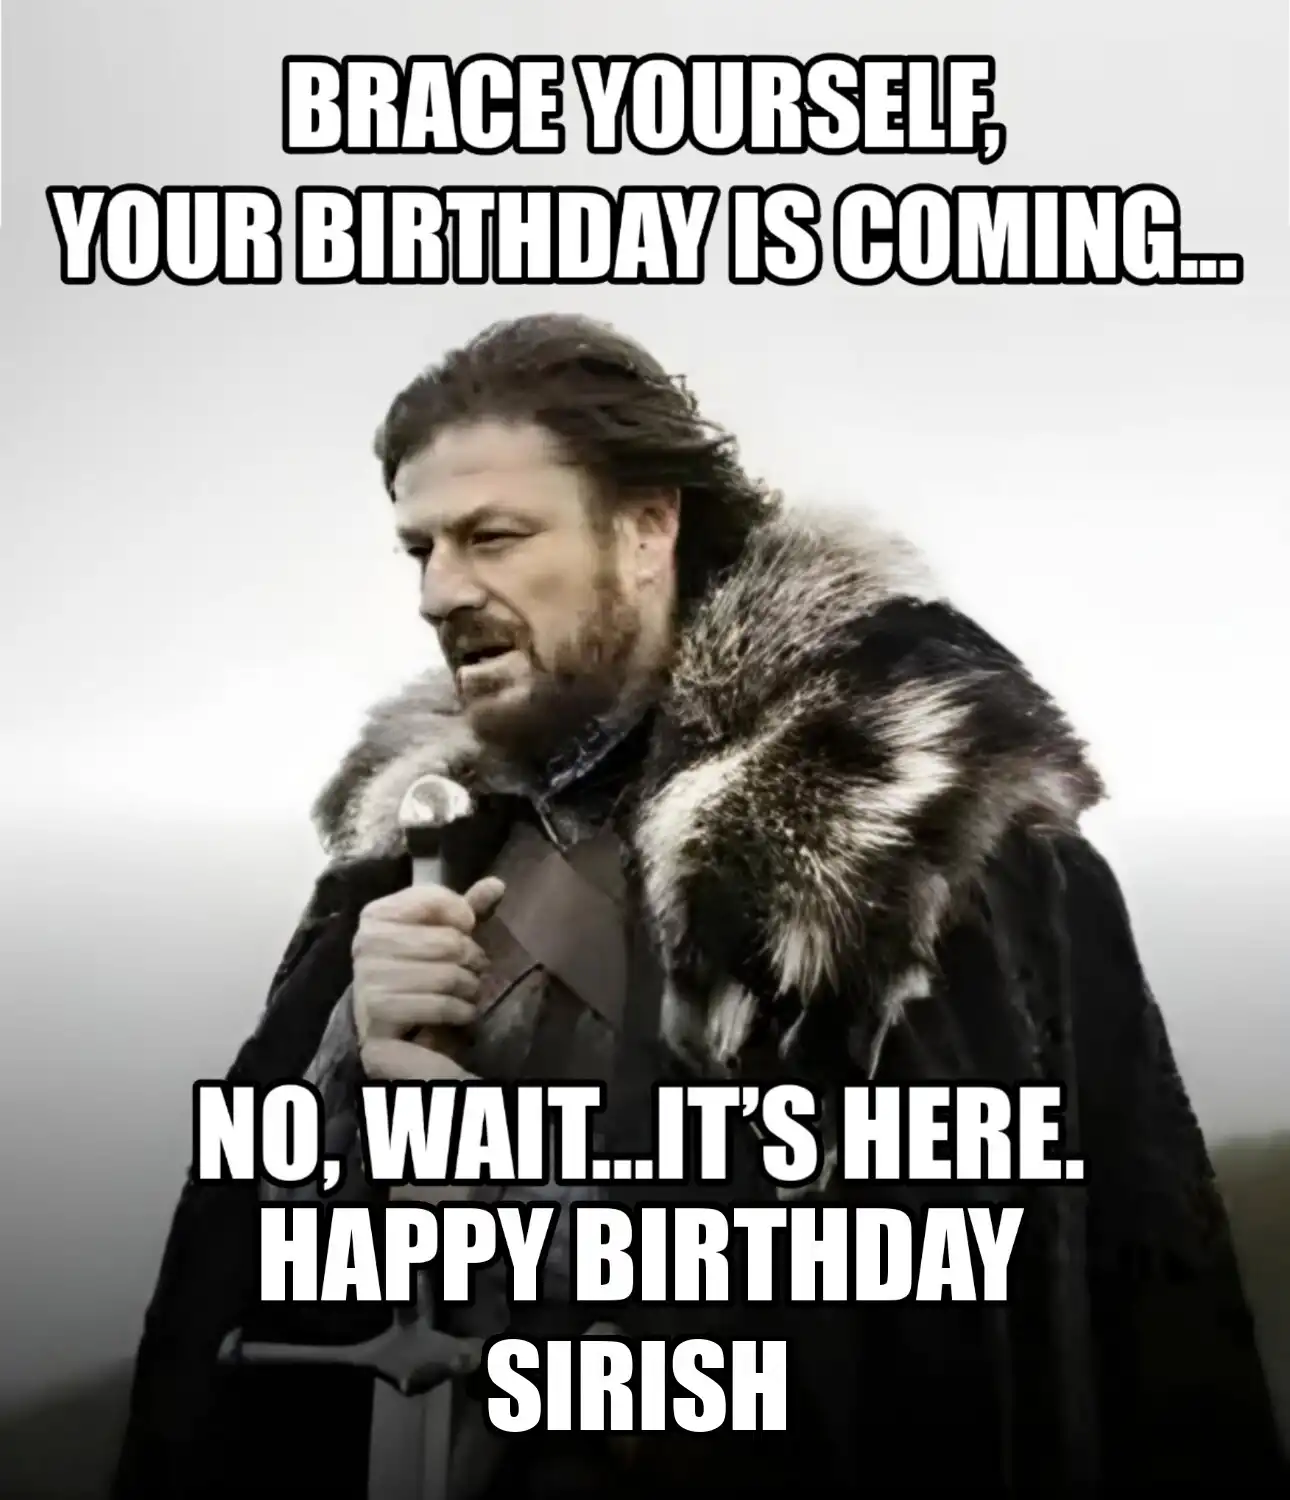 Happy Birthday Sirish Brace Yourself Your Birthday Is Coming Meme